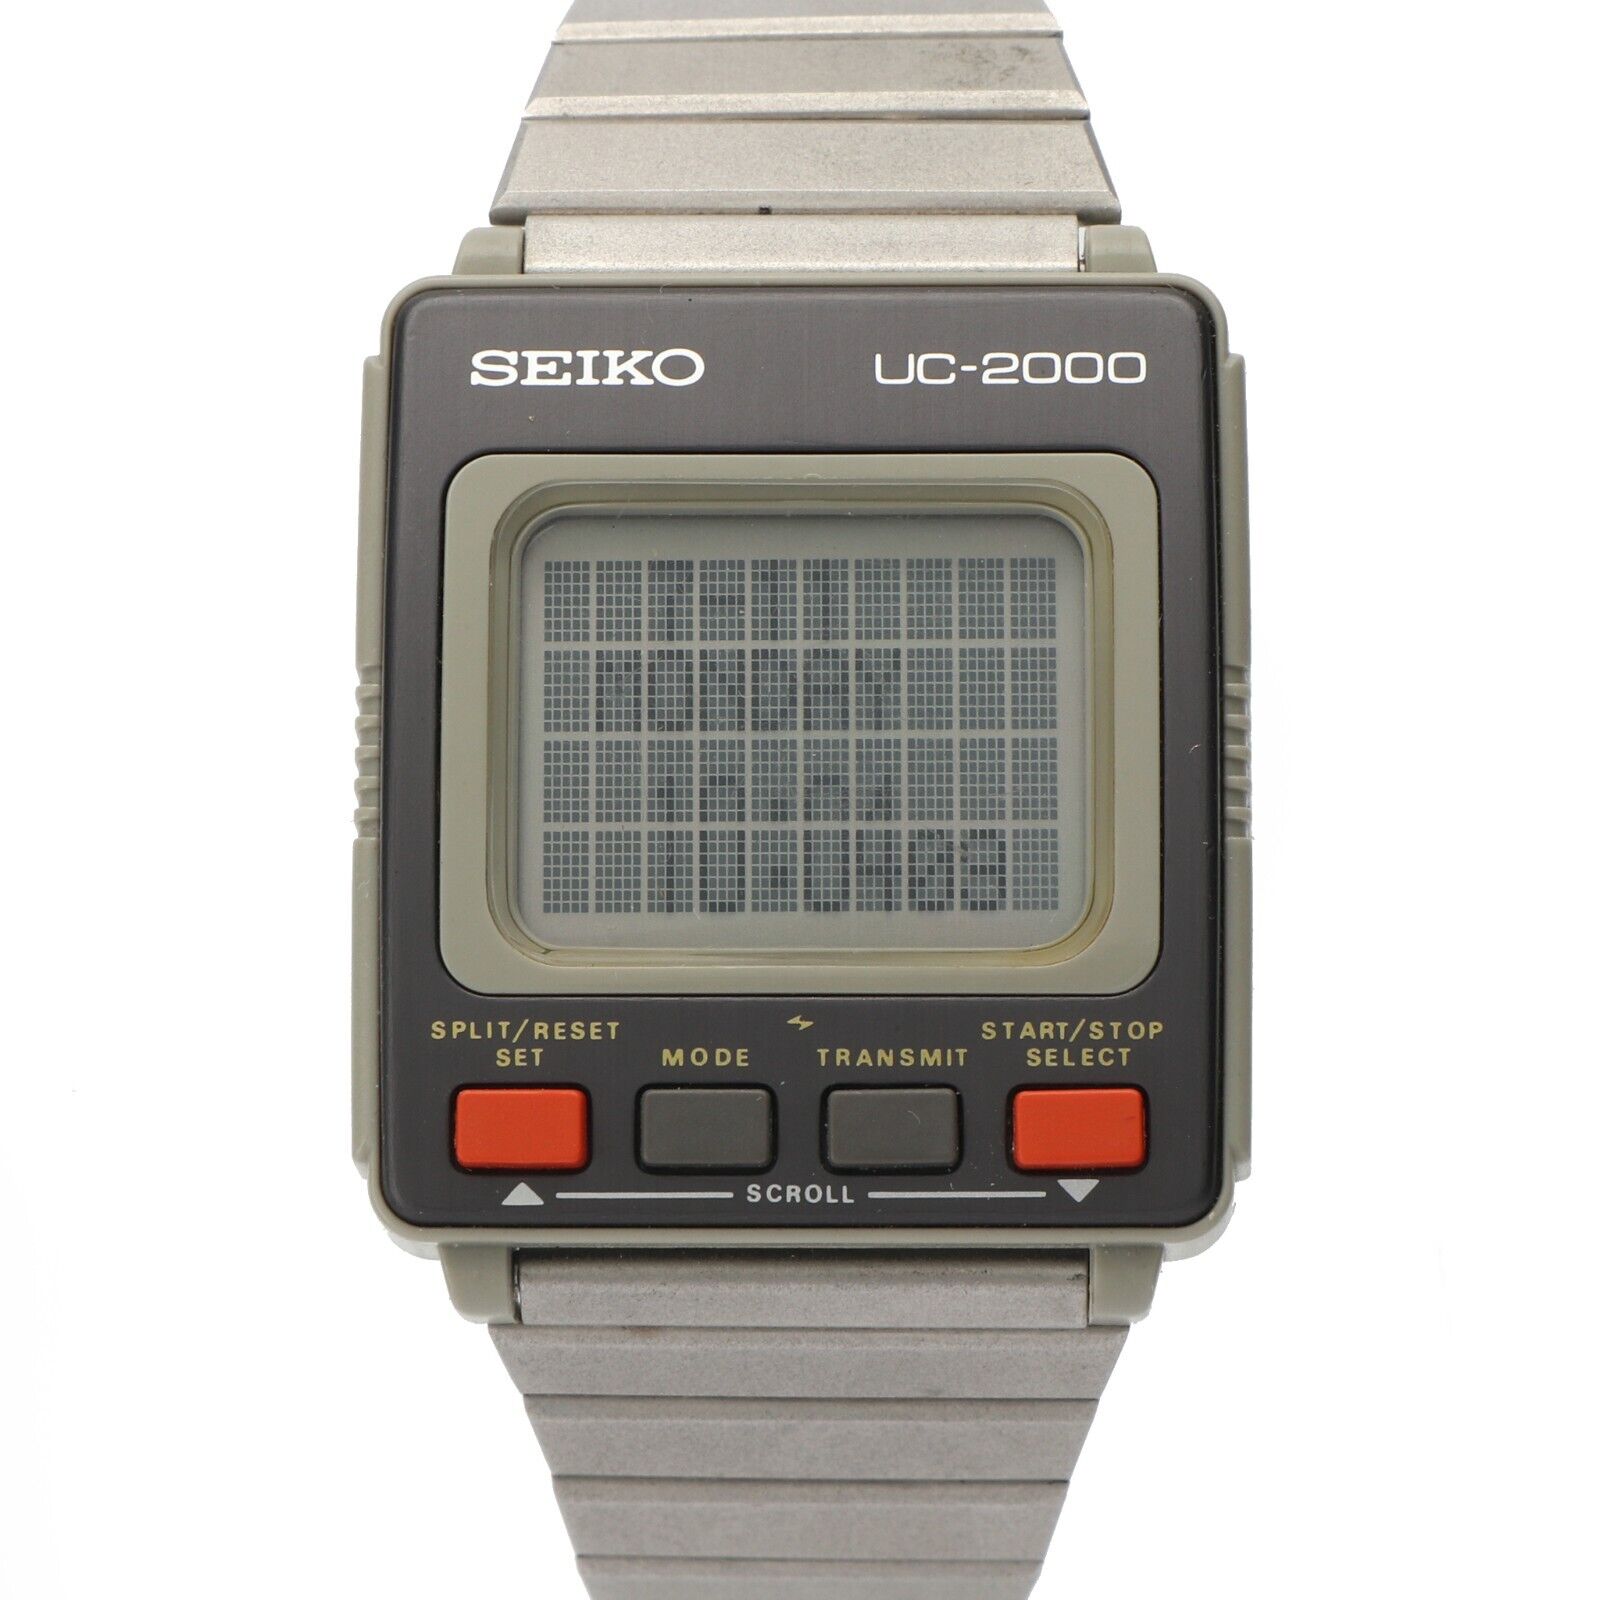 Seiko UC-2000 Market Price | WatchCharts